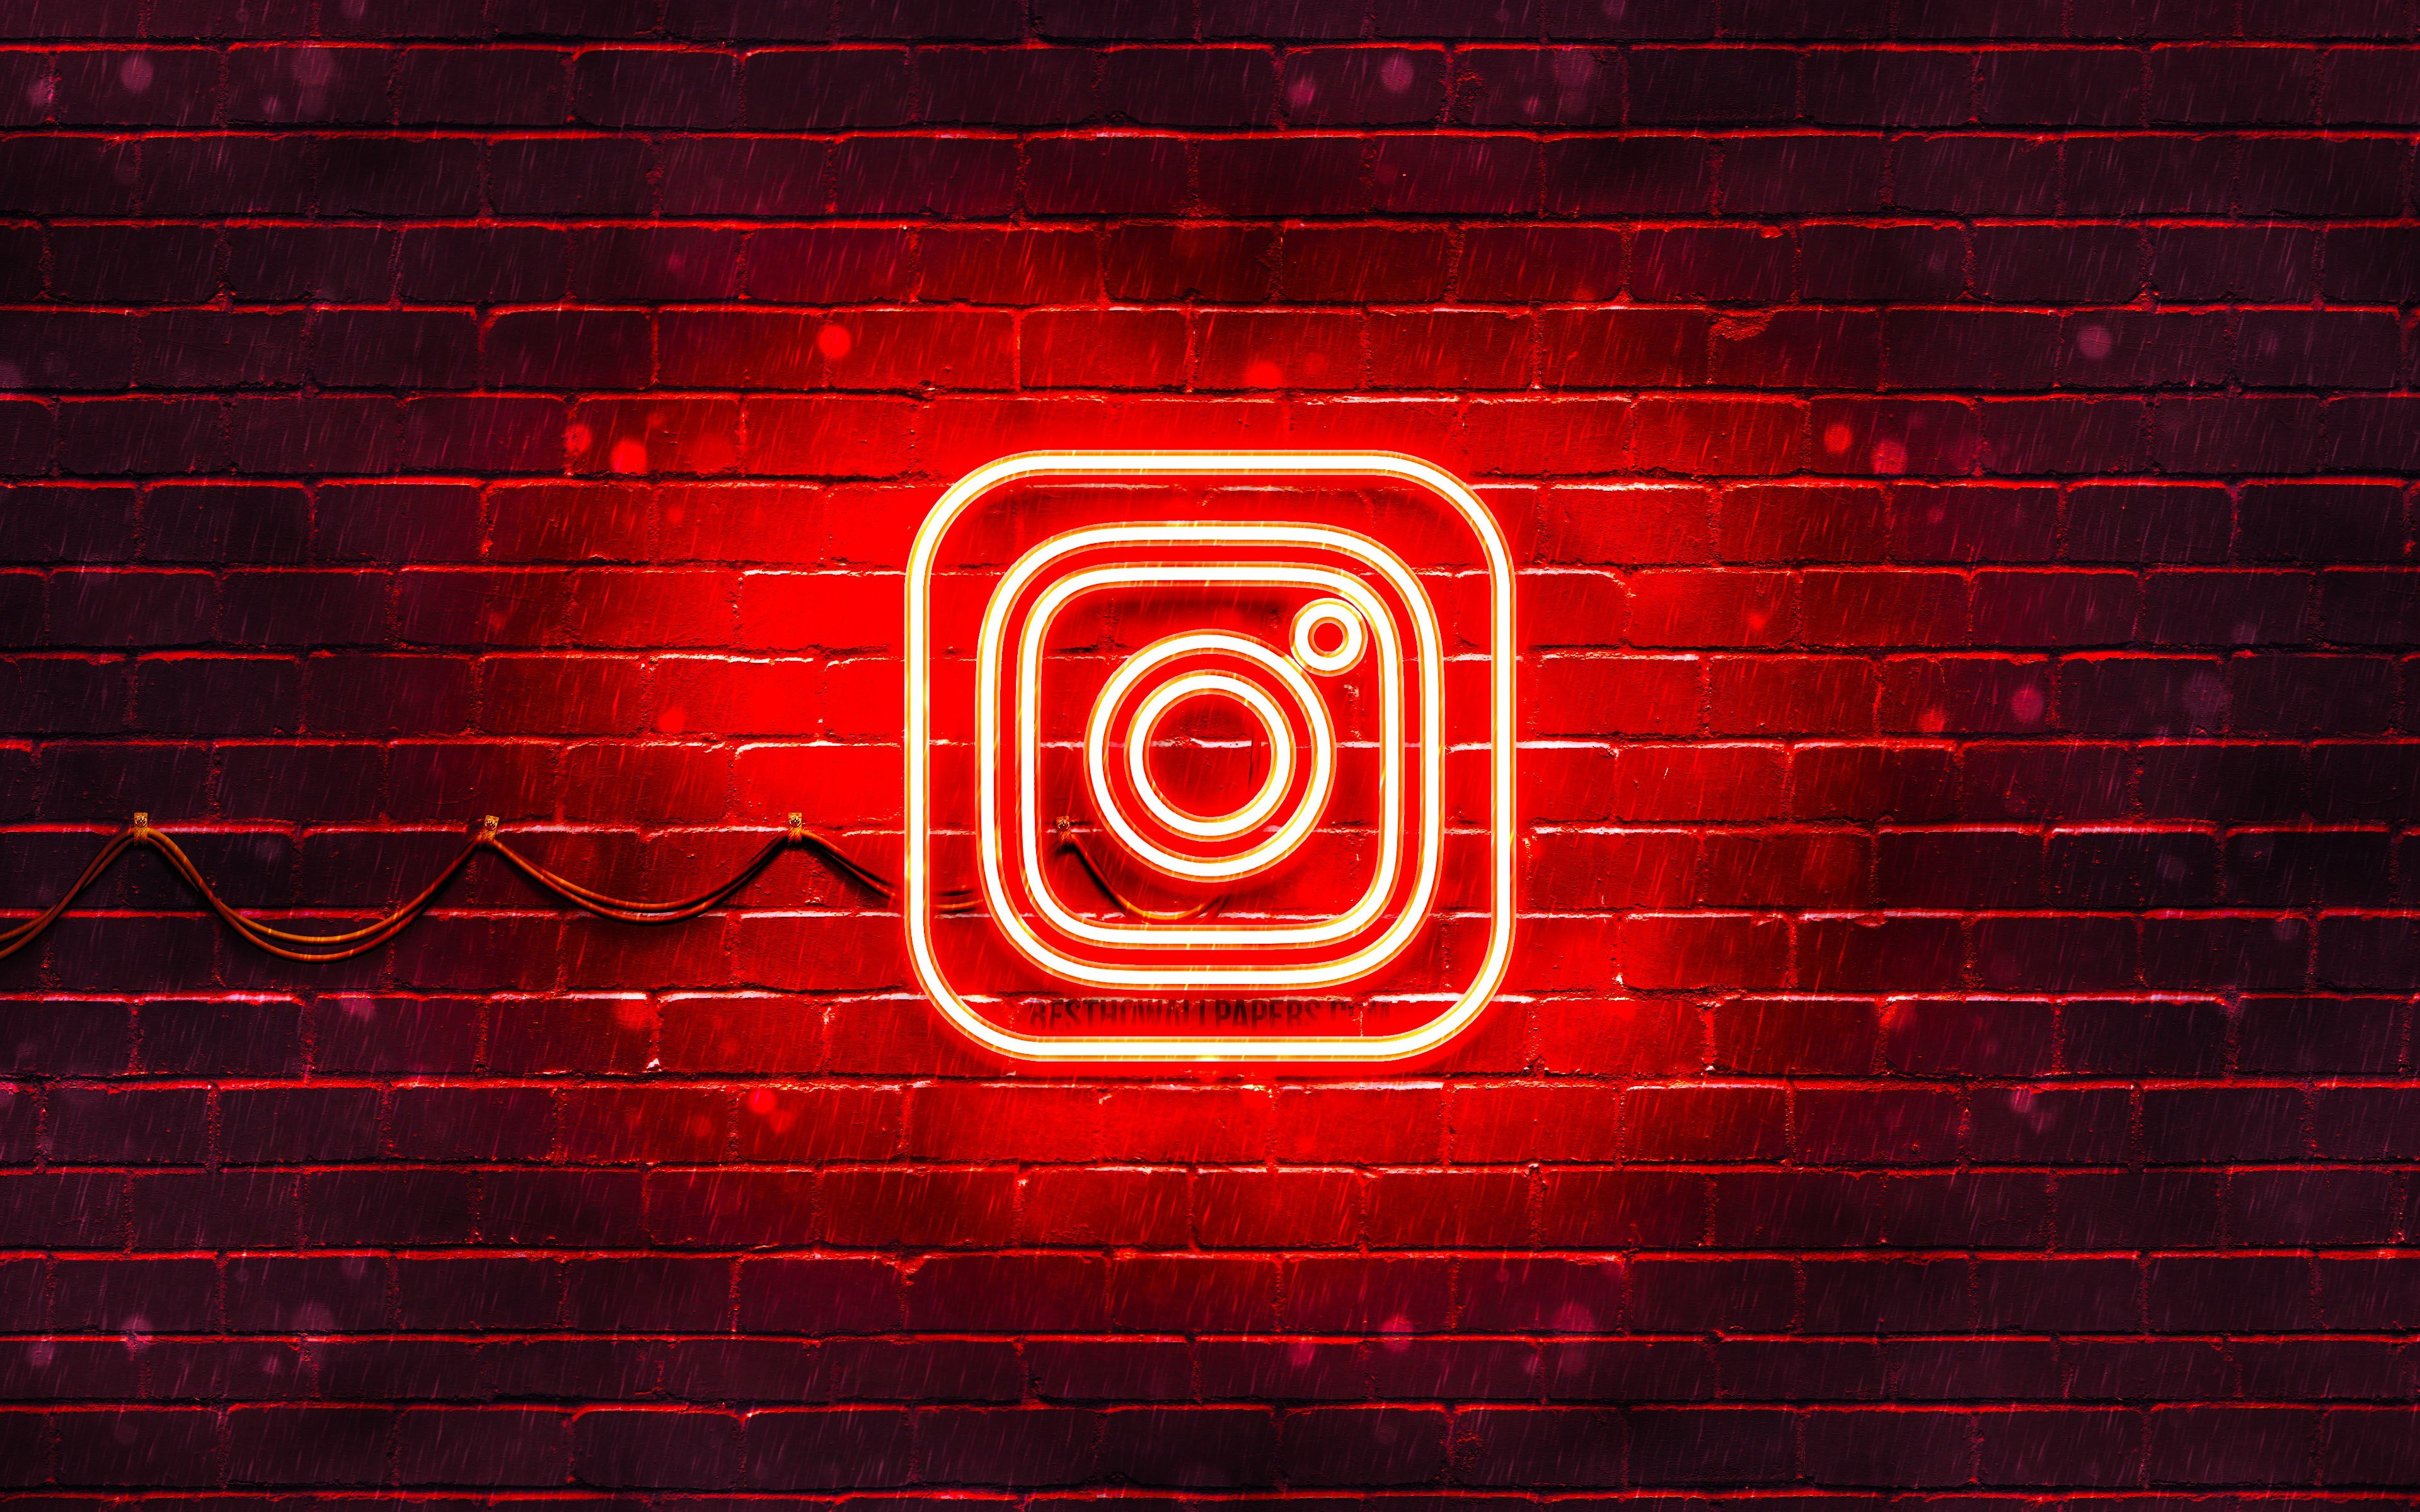 Download wallpapers Instagram red logo, red brickwall, 4k, Instagram ...